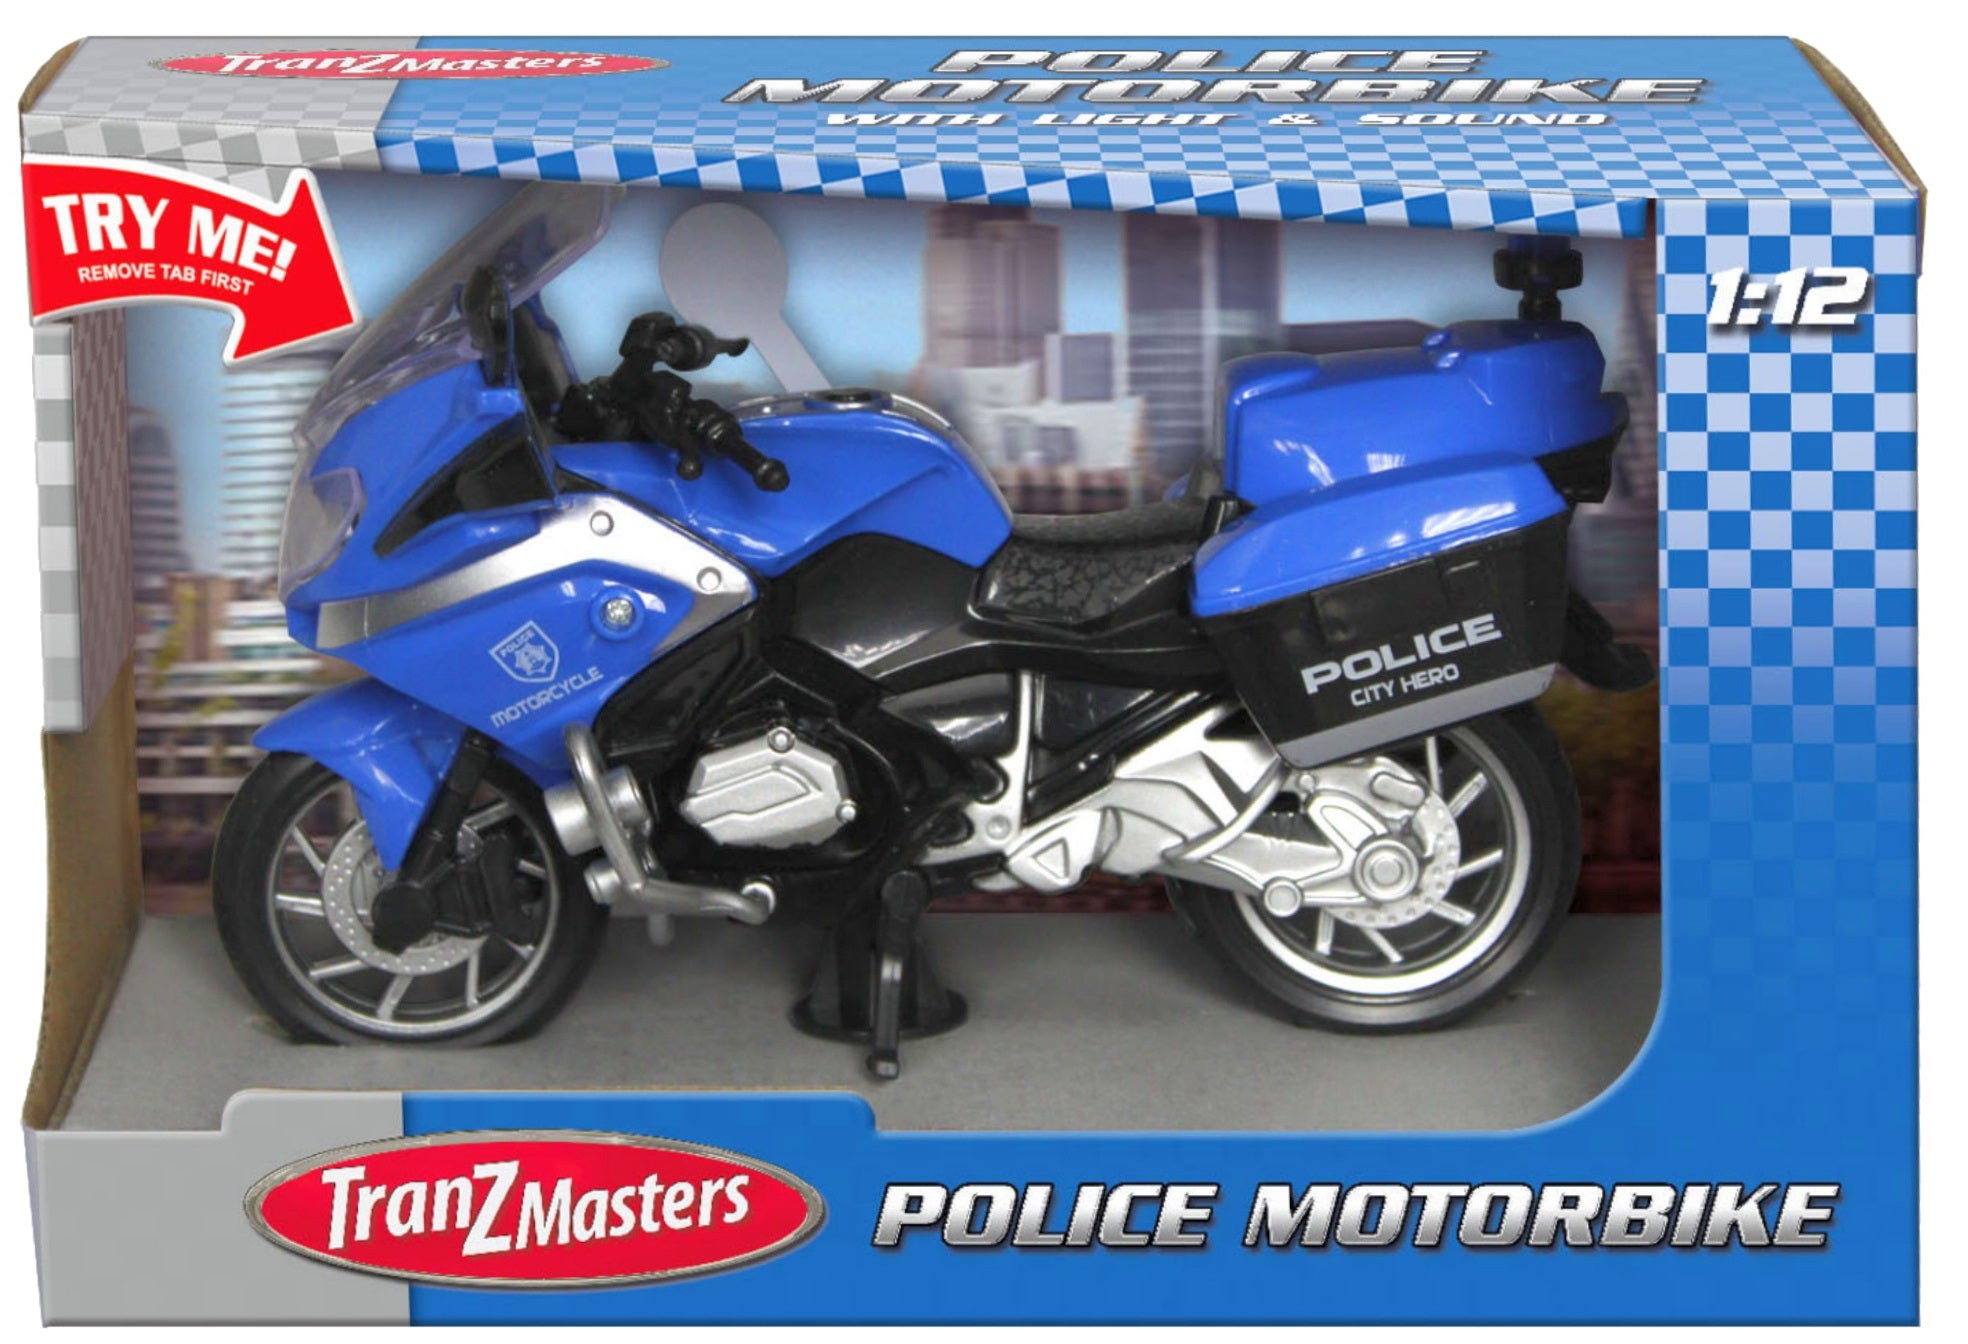 TranZmasters Police Motorbike 18cm